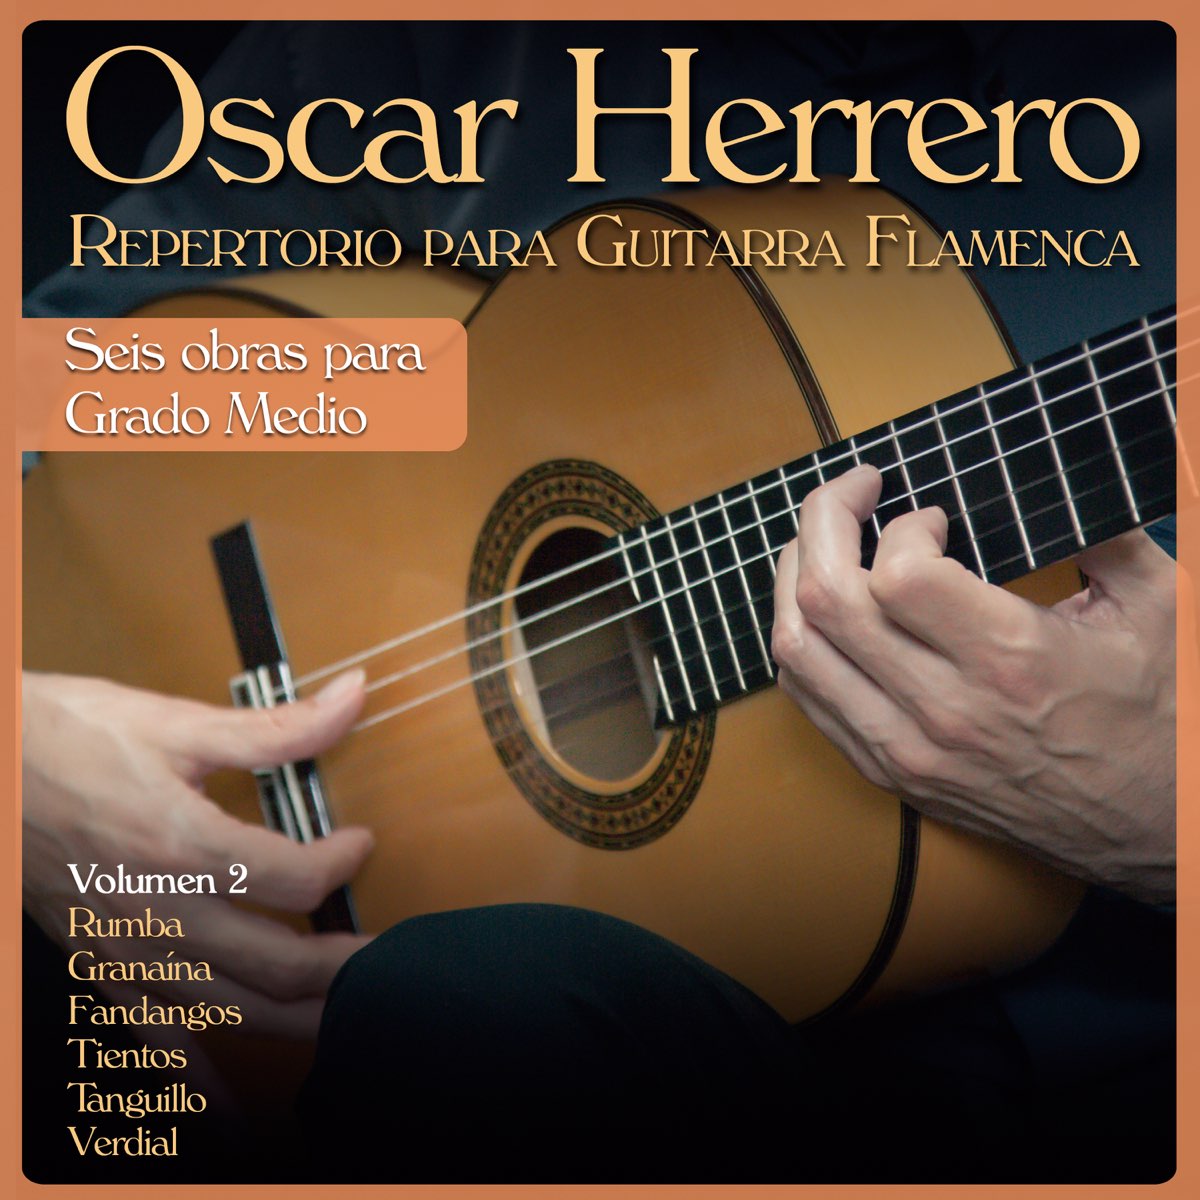 Repertorio para Guitarra Flamenca: Seis Obras para Grado Medio, Vol. 2 - EP  by Oscar Herrero on Apple Music